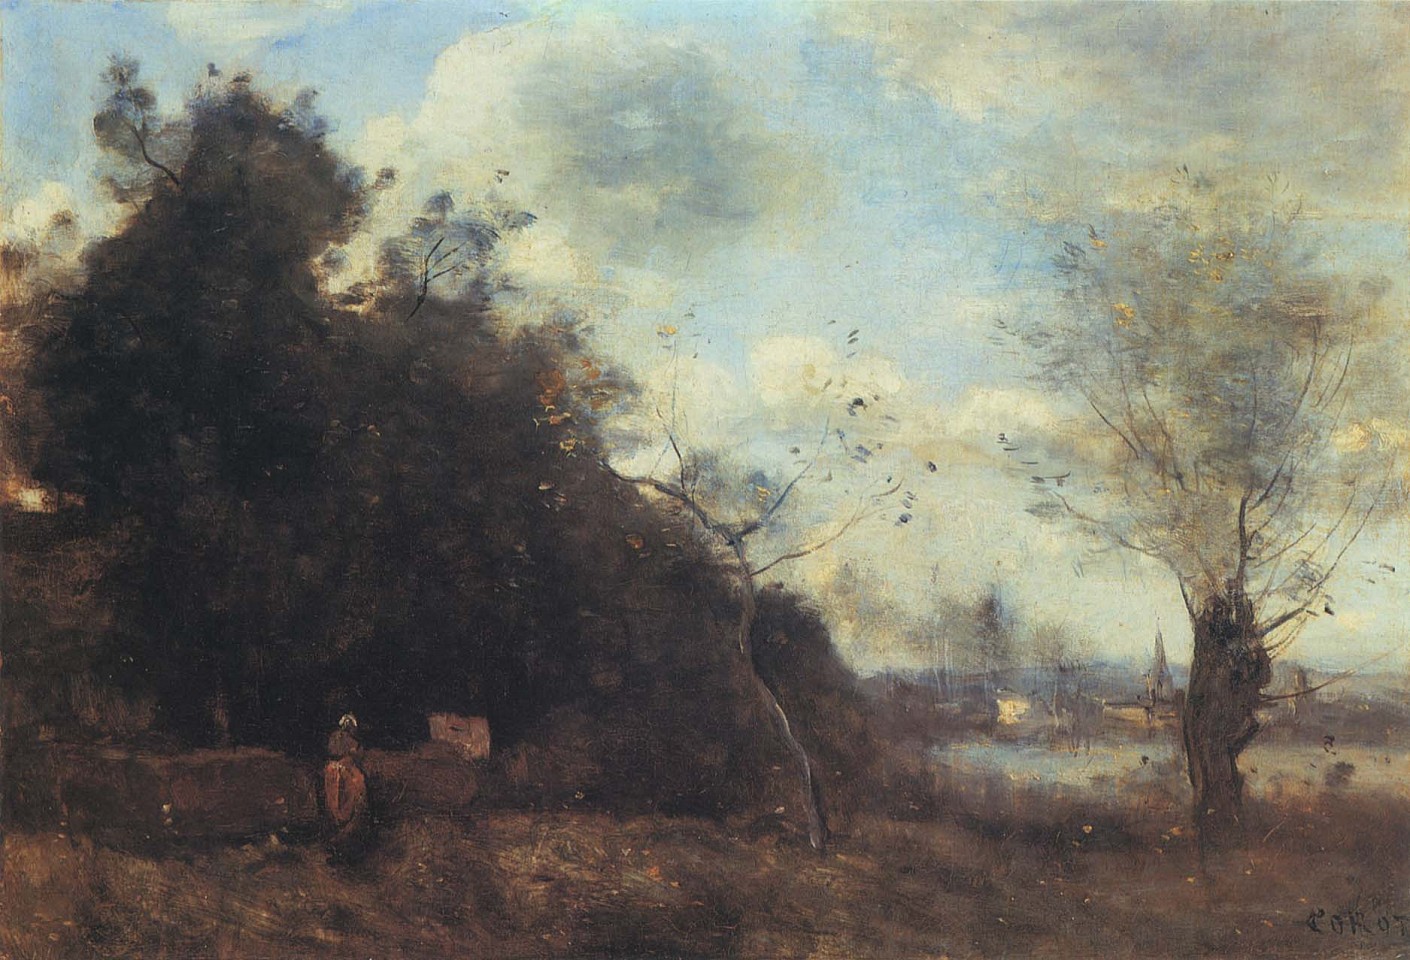 Jean Baptiste Camille Corot, Les Pres au Vieux Saule, 1870-73
Oil on canvas, 13 1/4 x 17 1/4 in. (33.7 x 43.8 cm)
COR-002-PA
Appraisal Value: $0.00
User2: $0.00
User3: $0.00